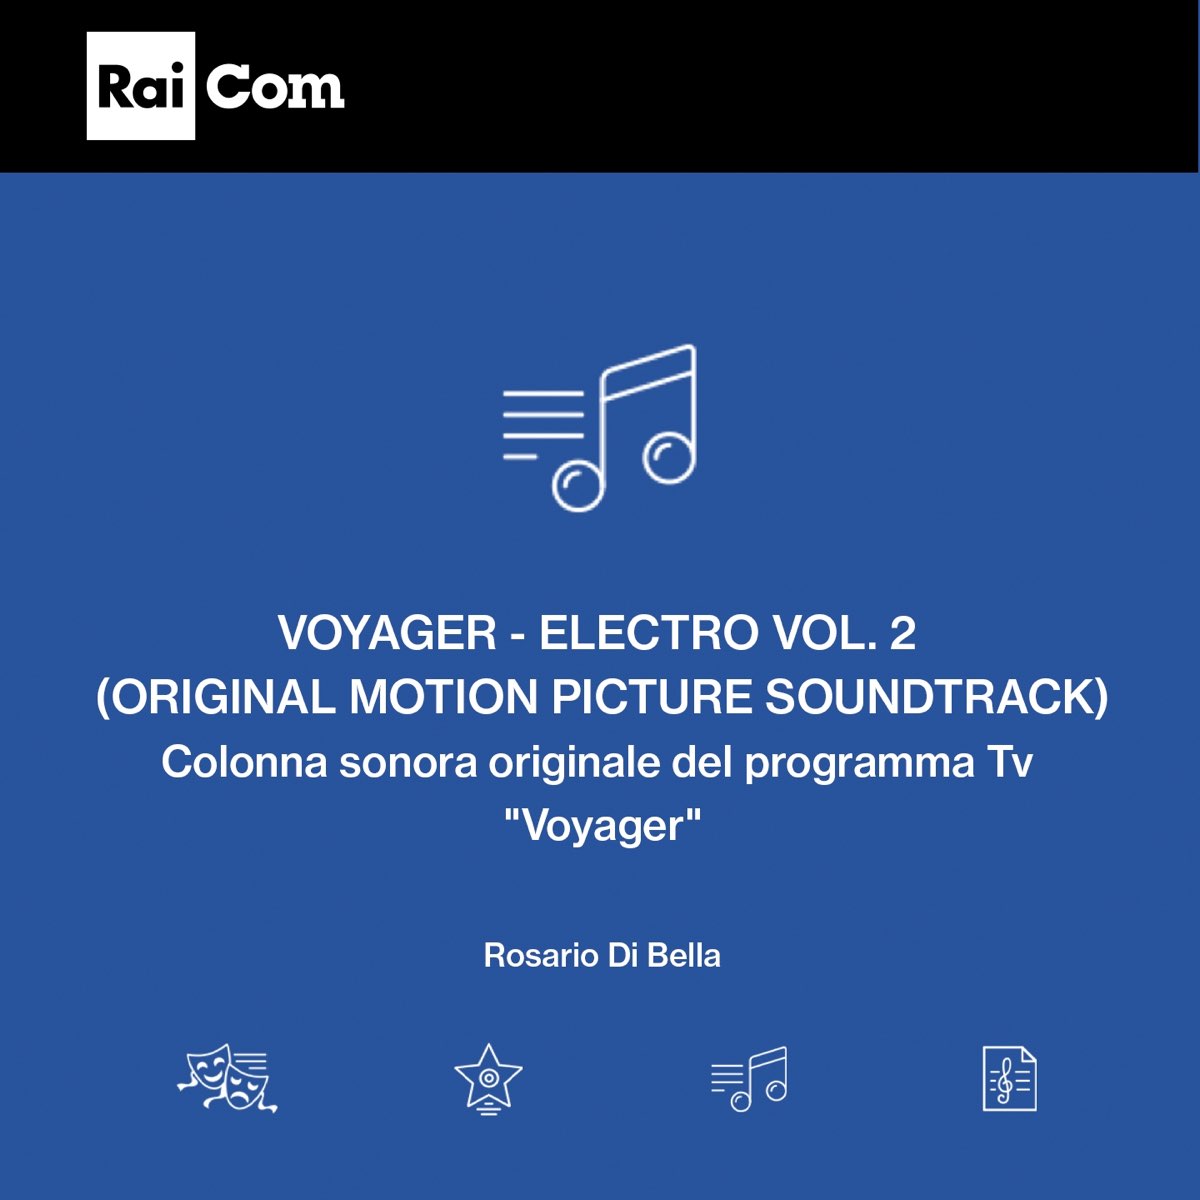 Voyager - Electro, Vol. 2 (Colonna sonora originale del programma Tv " Voyager") - Album di Rosario Di Bella - Apple Music